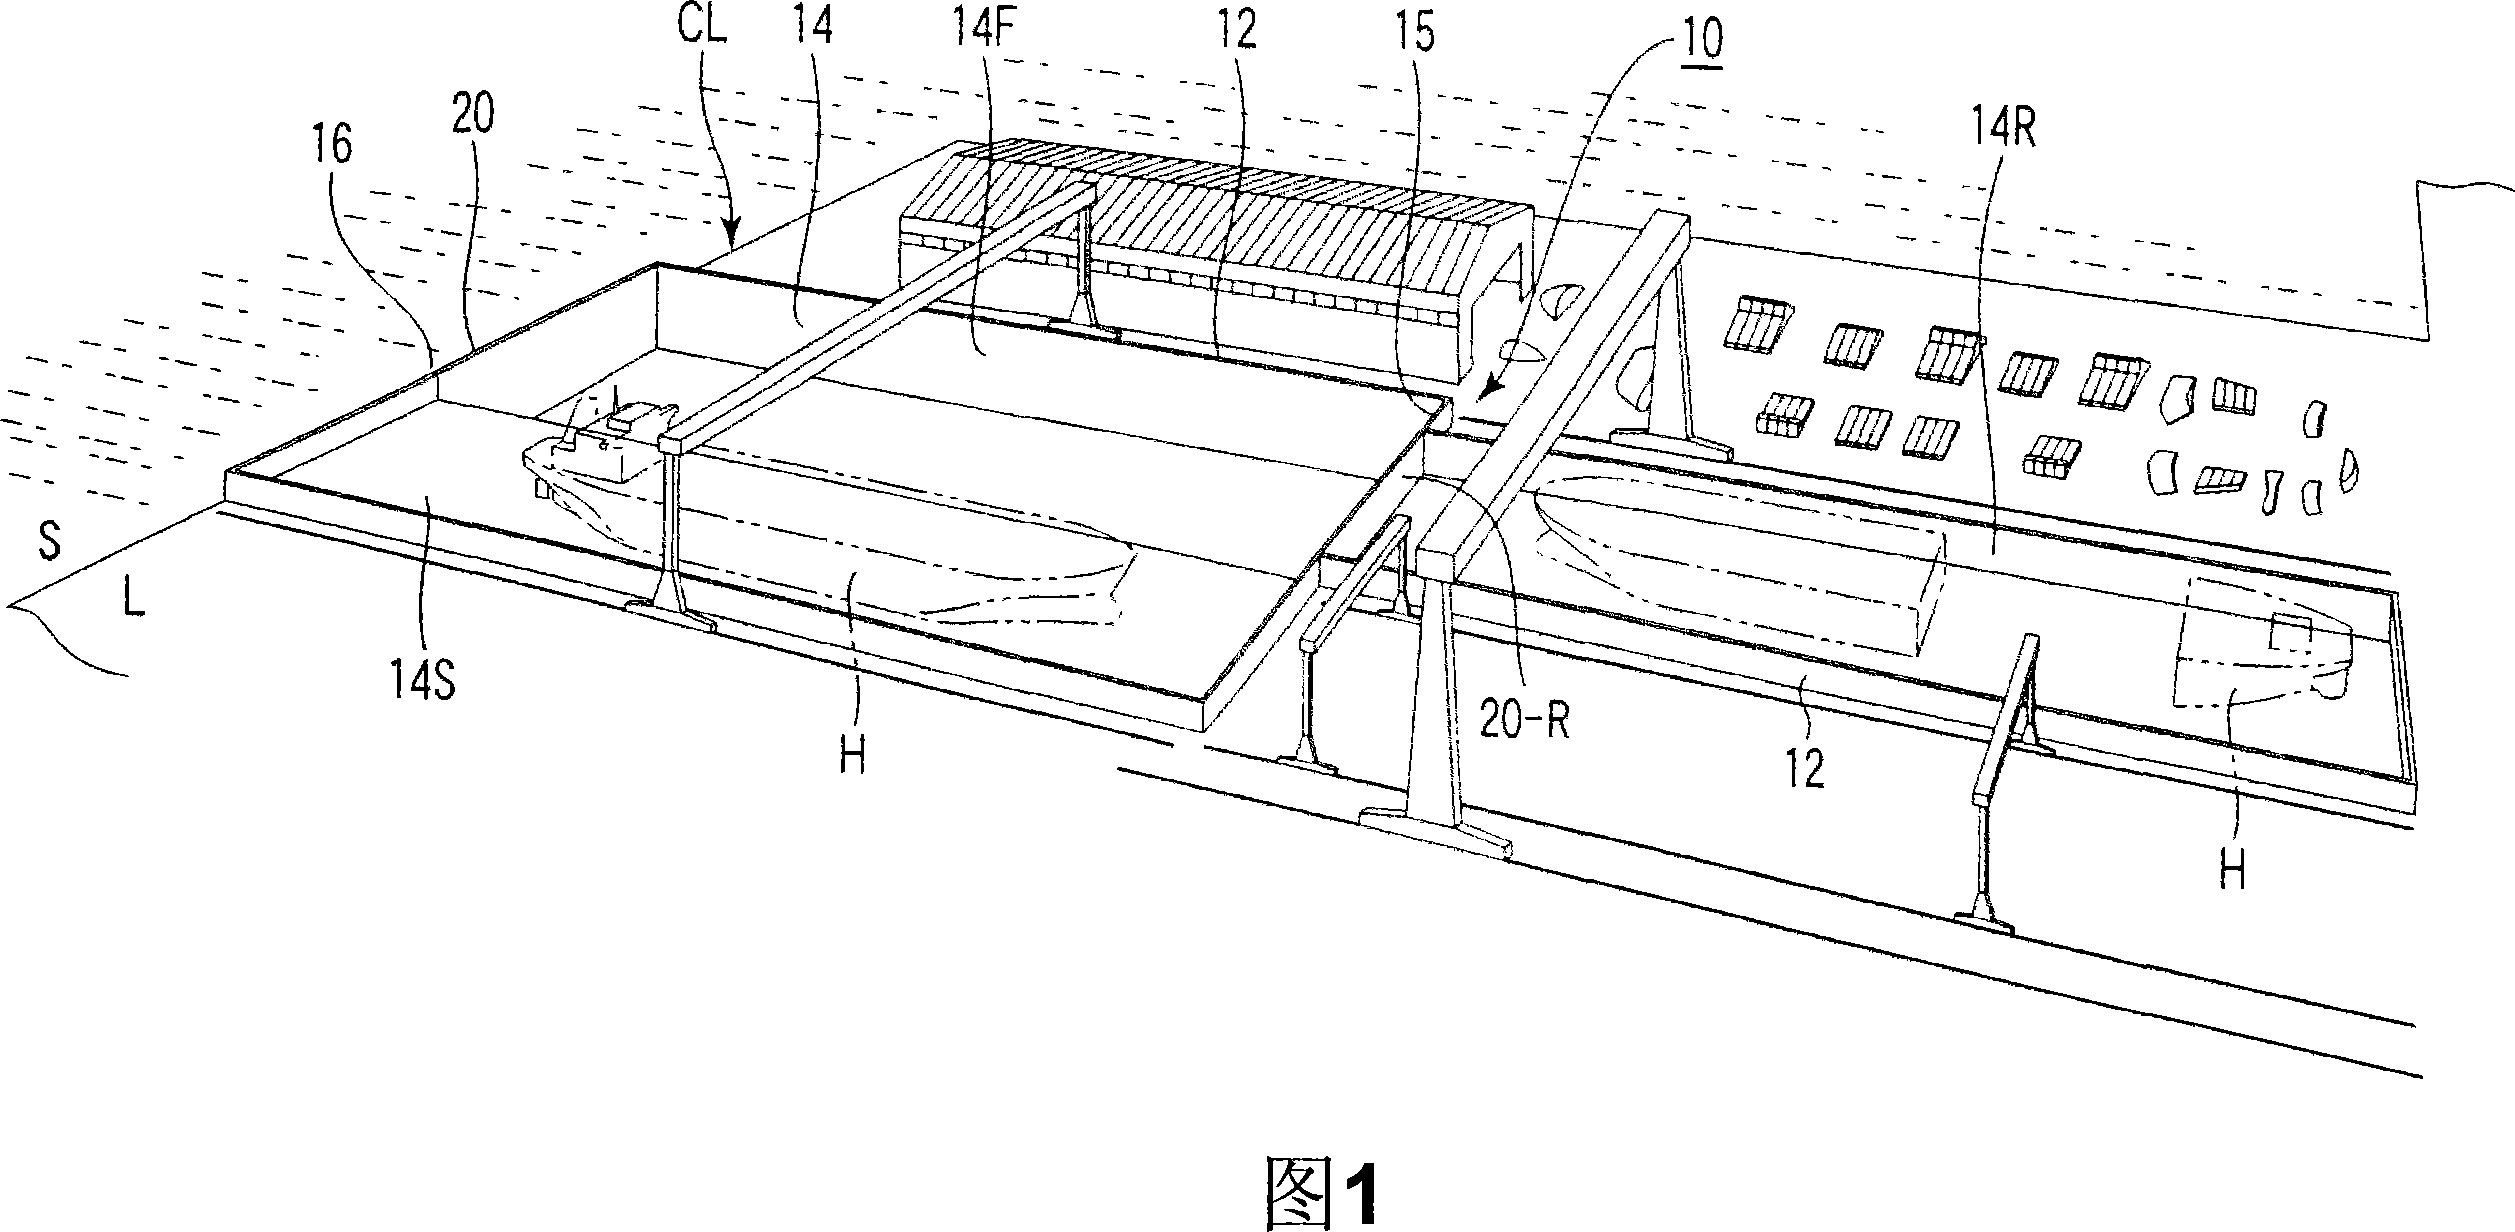 Boatbuilding system